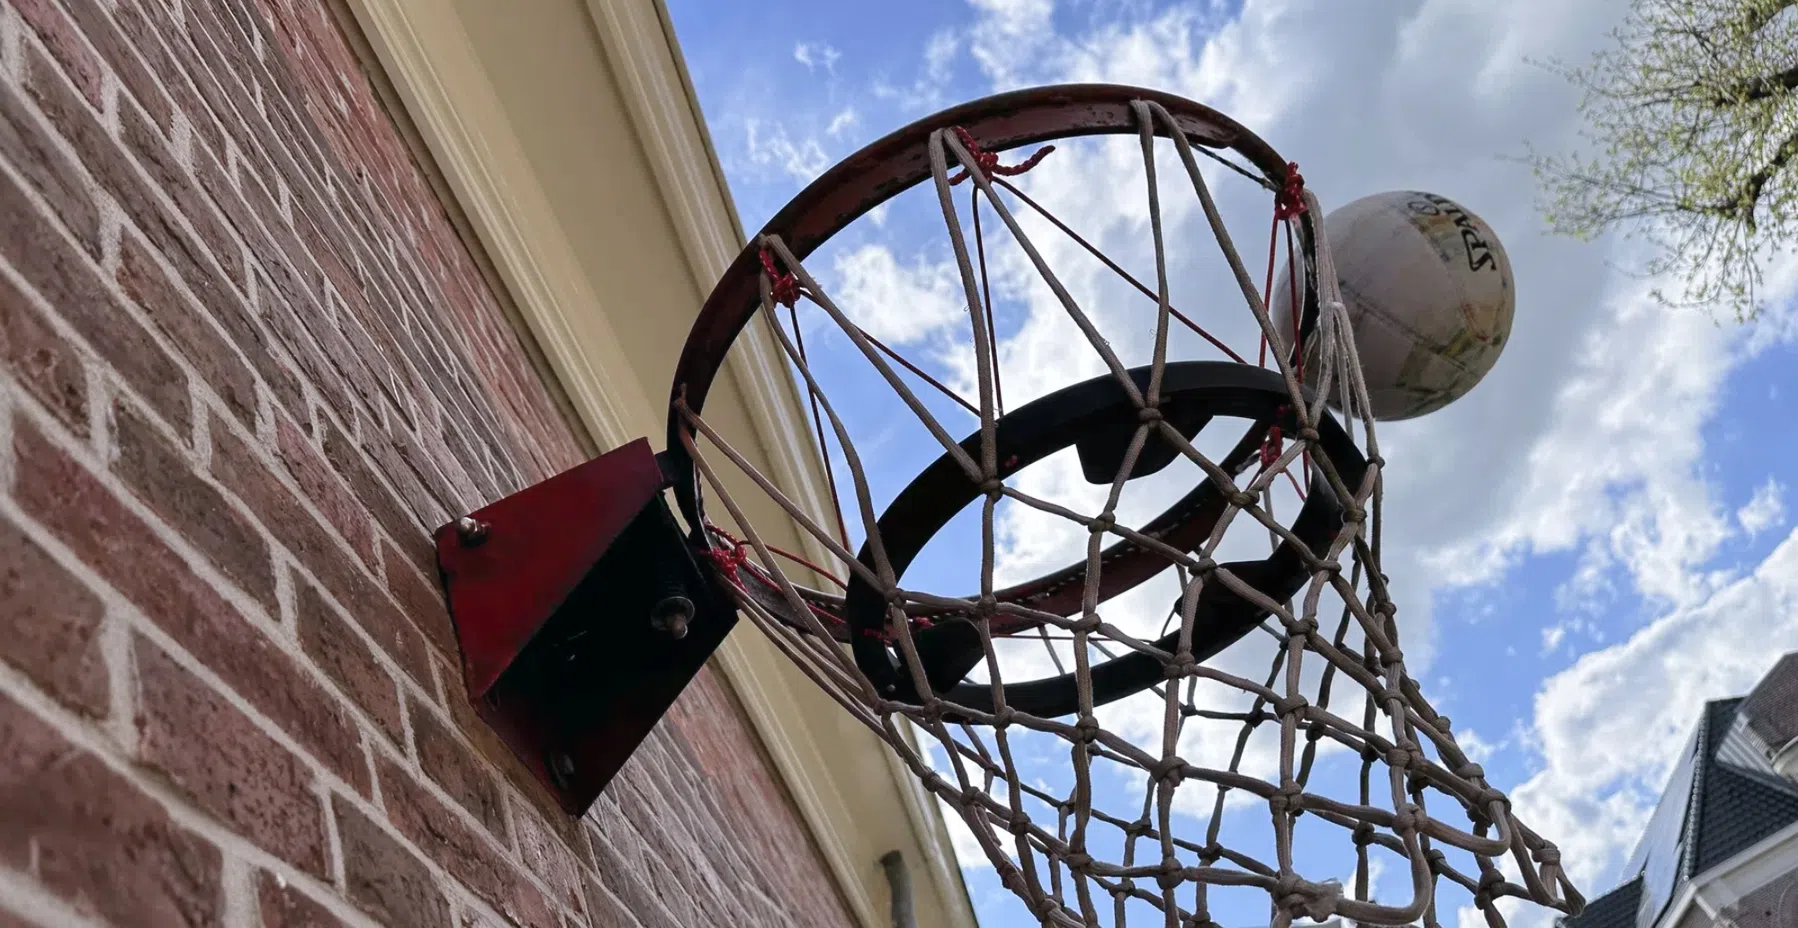 Review Decathlon digitale scoreteller voor basketball